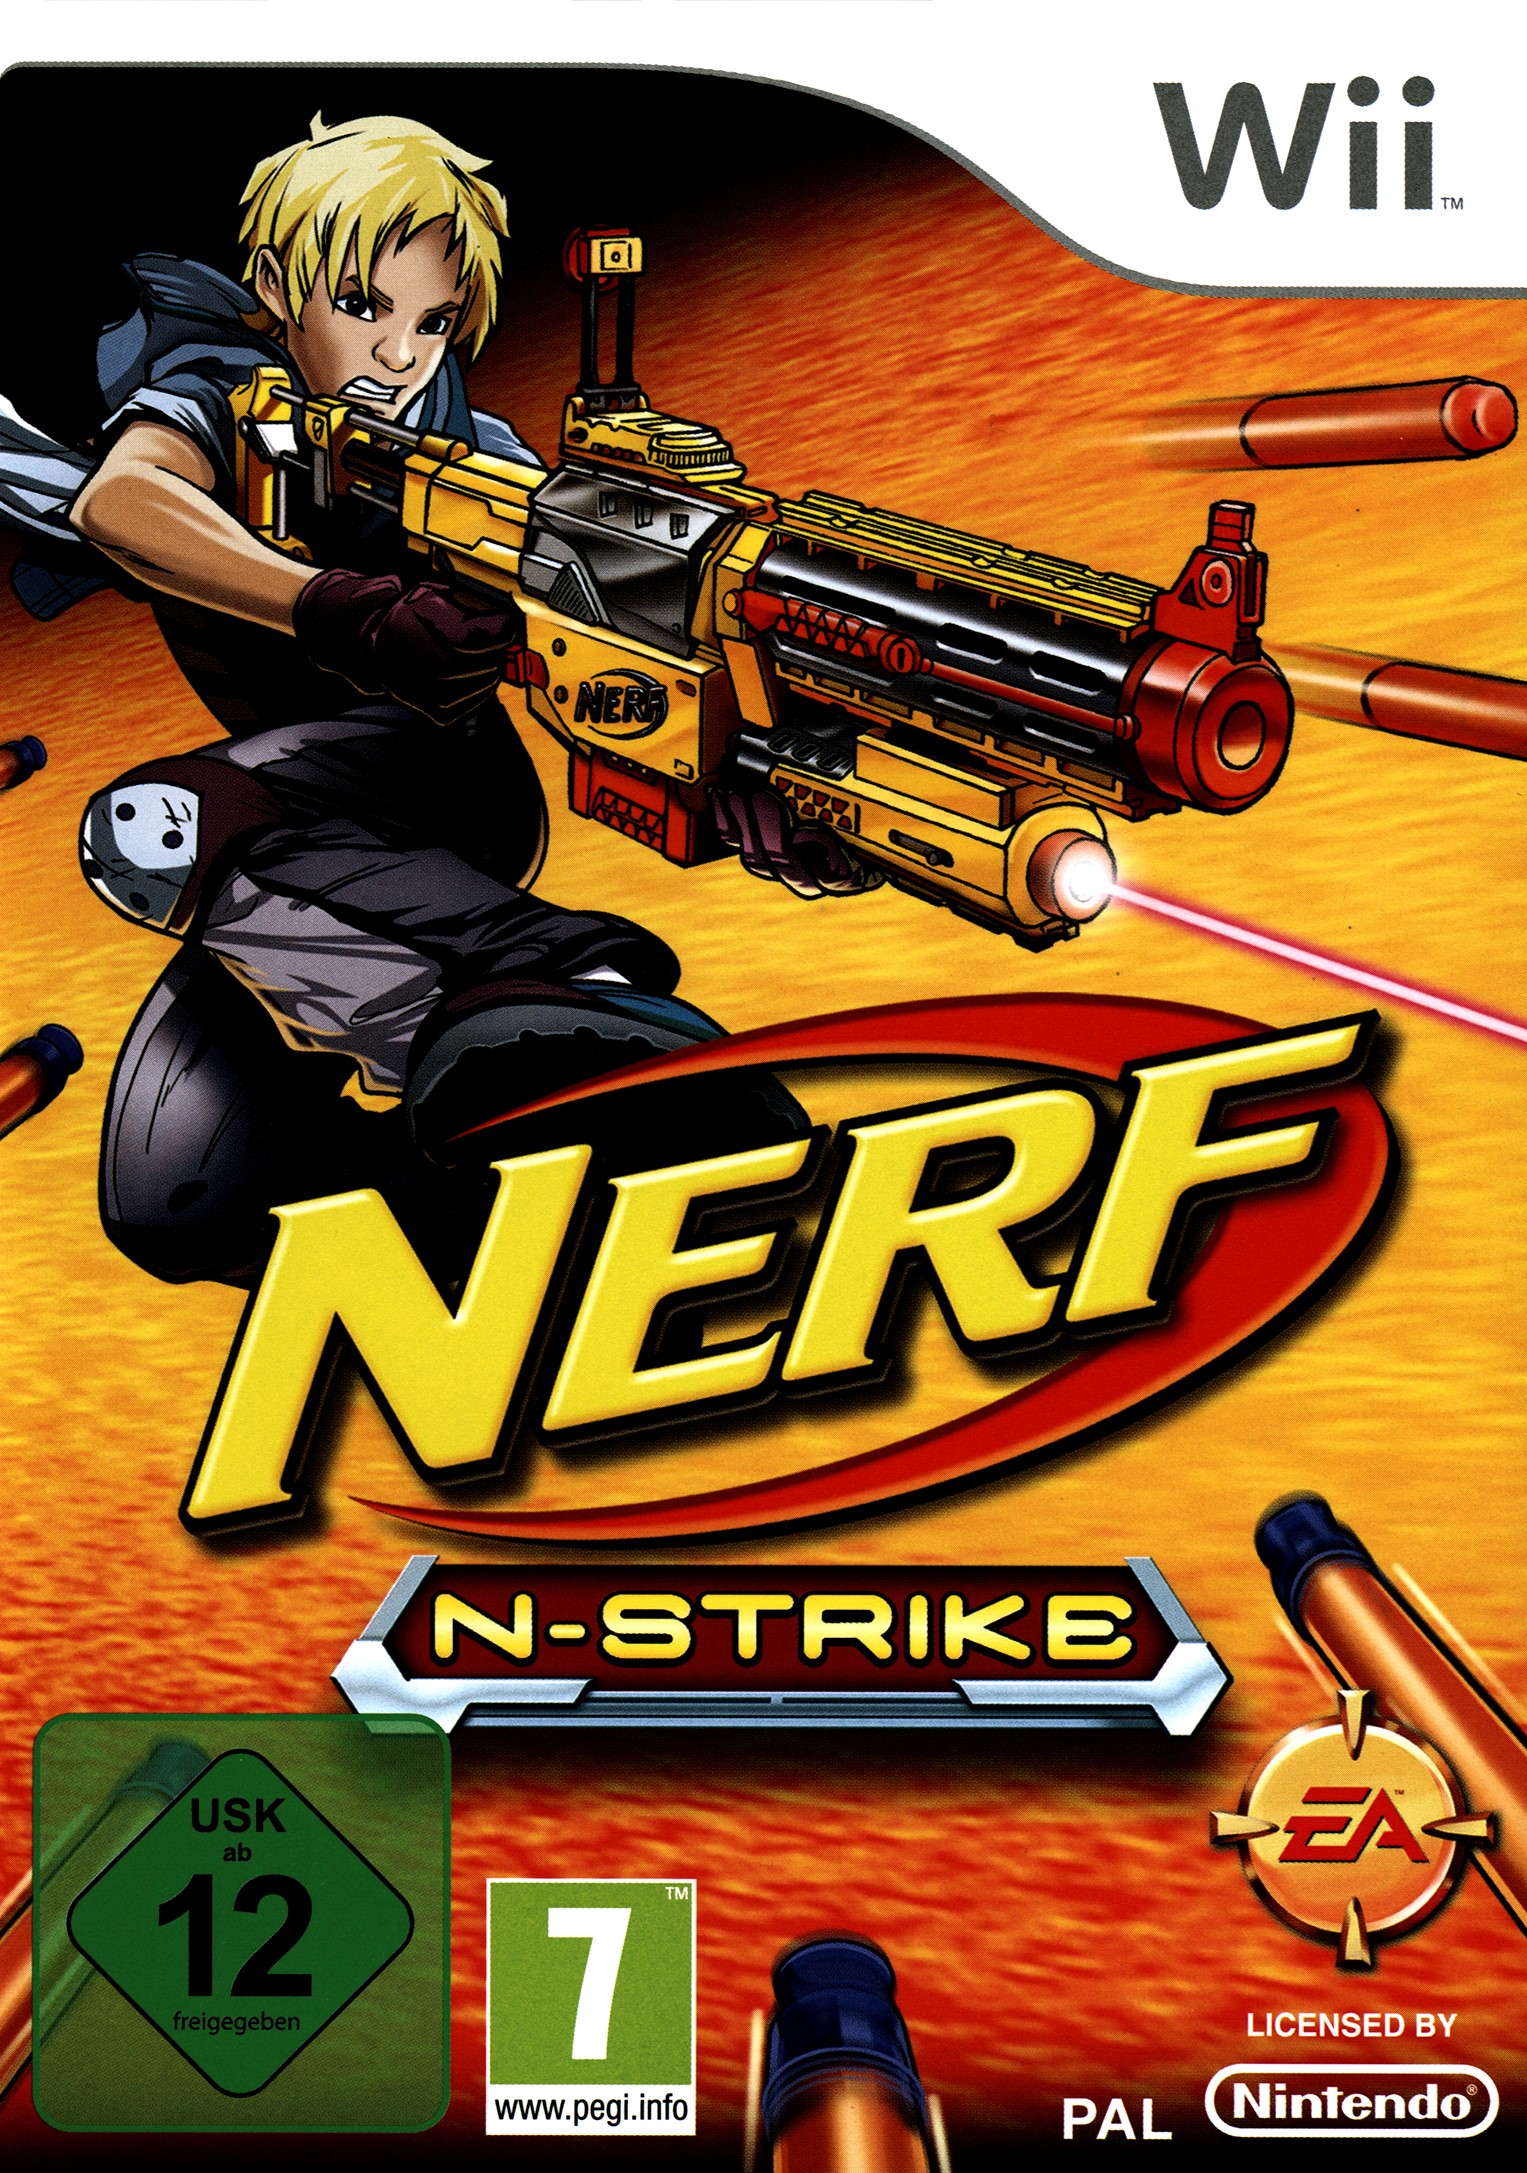 'Nerf: N-Strike'